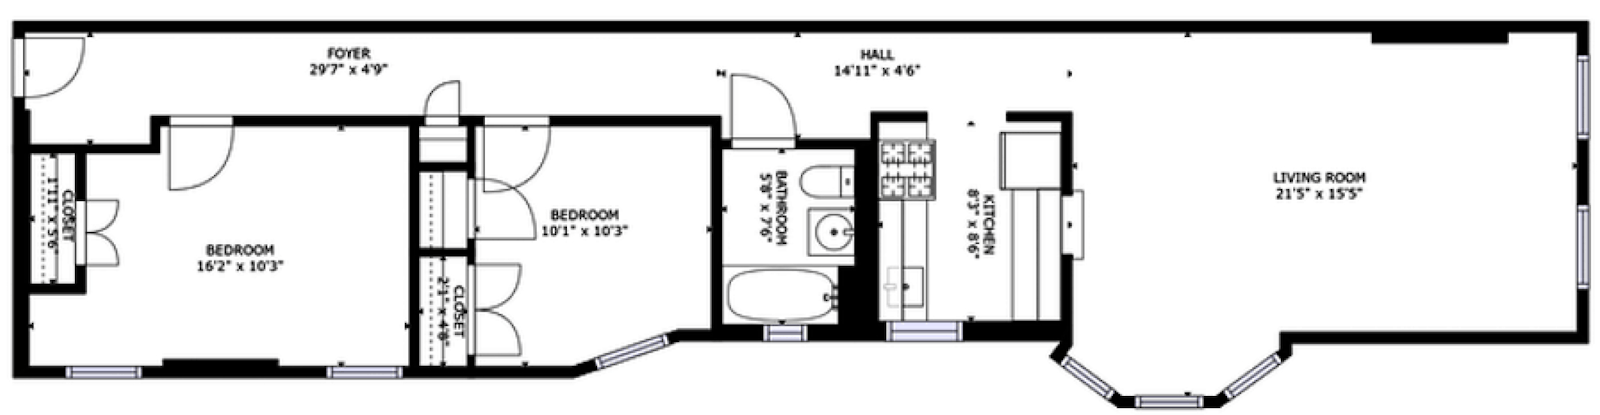 Floorplan for 133 West 140th Street, 24